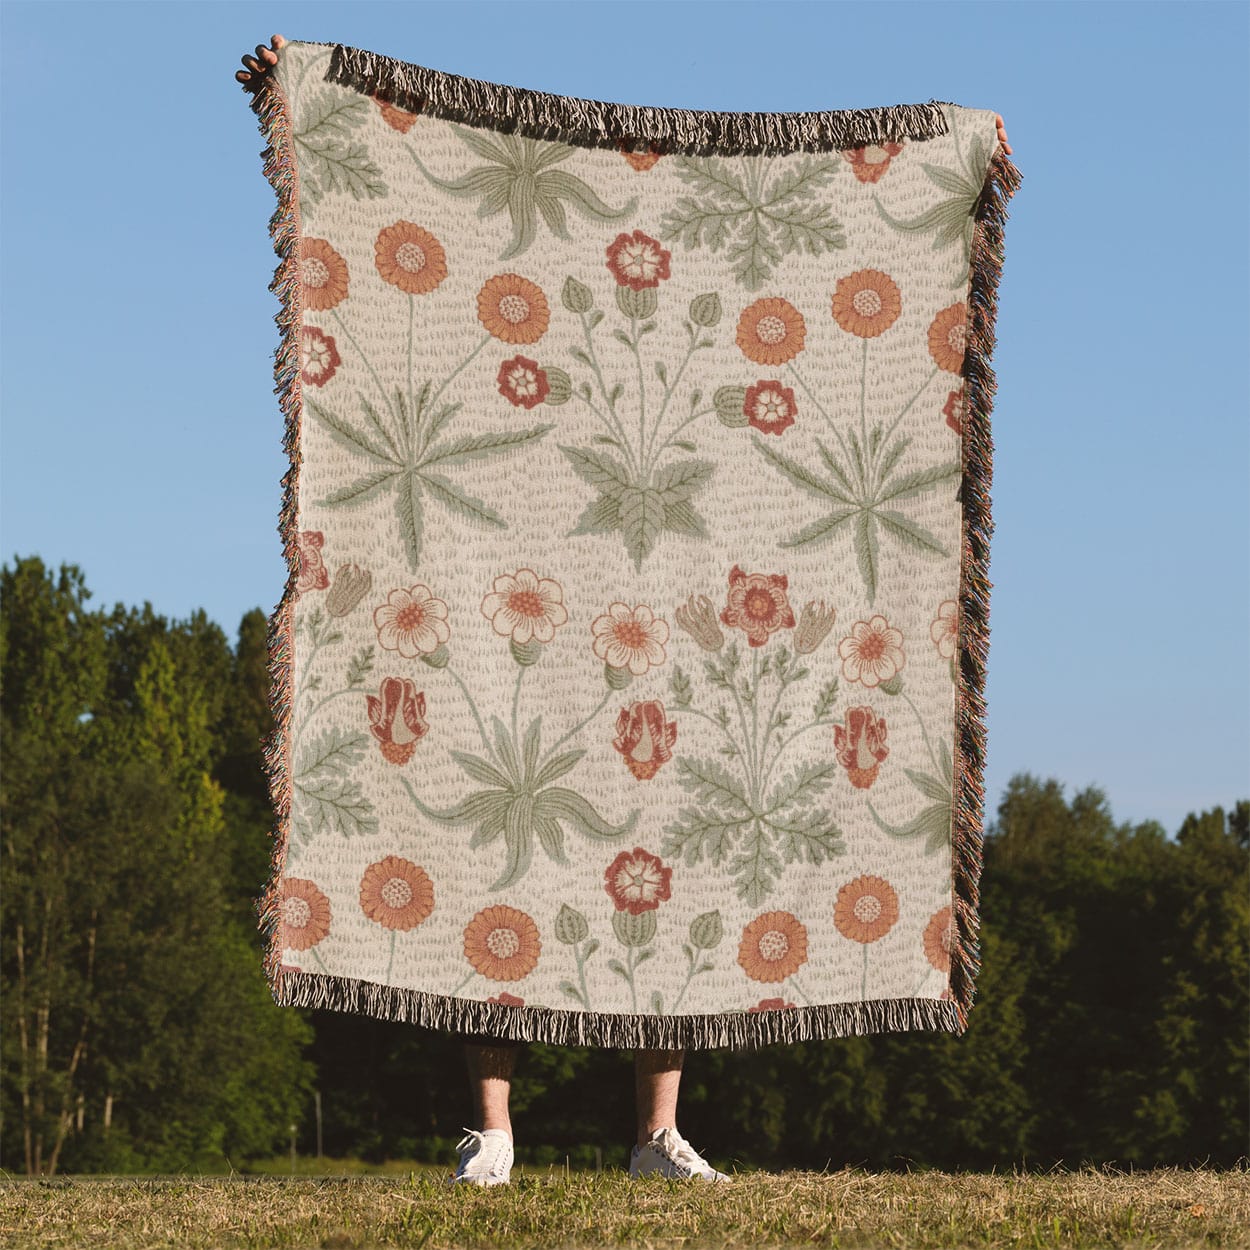 Minimalist Spring Flowers Woven Blanket Held on a Woman's Back Outside